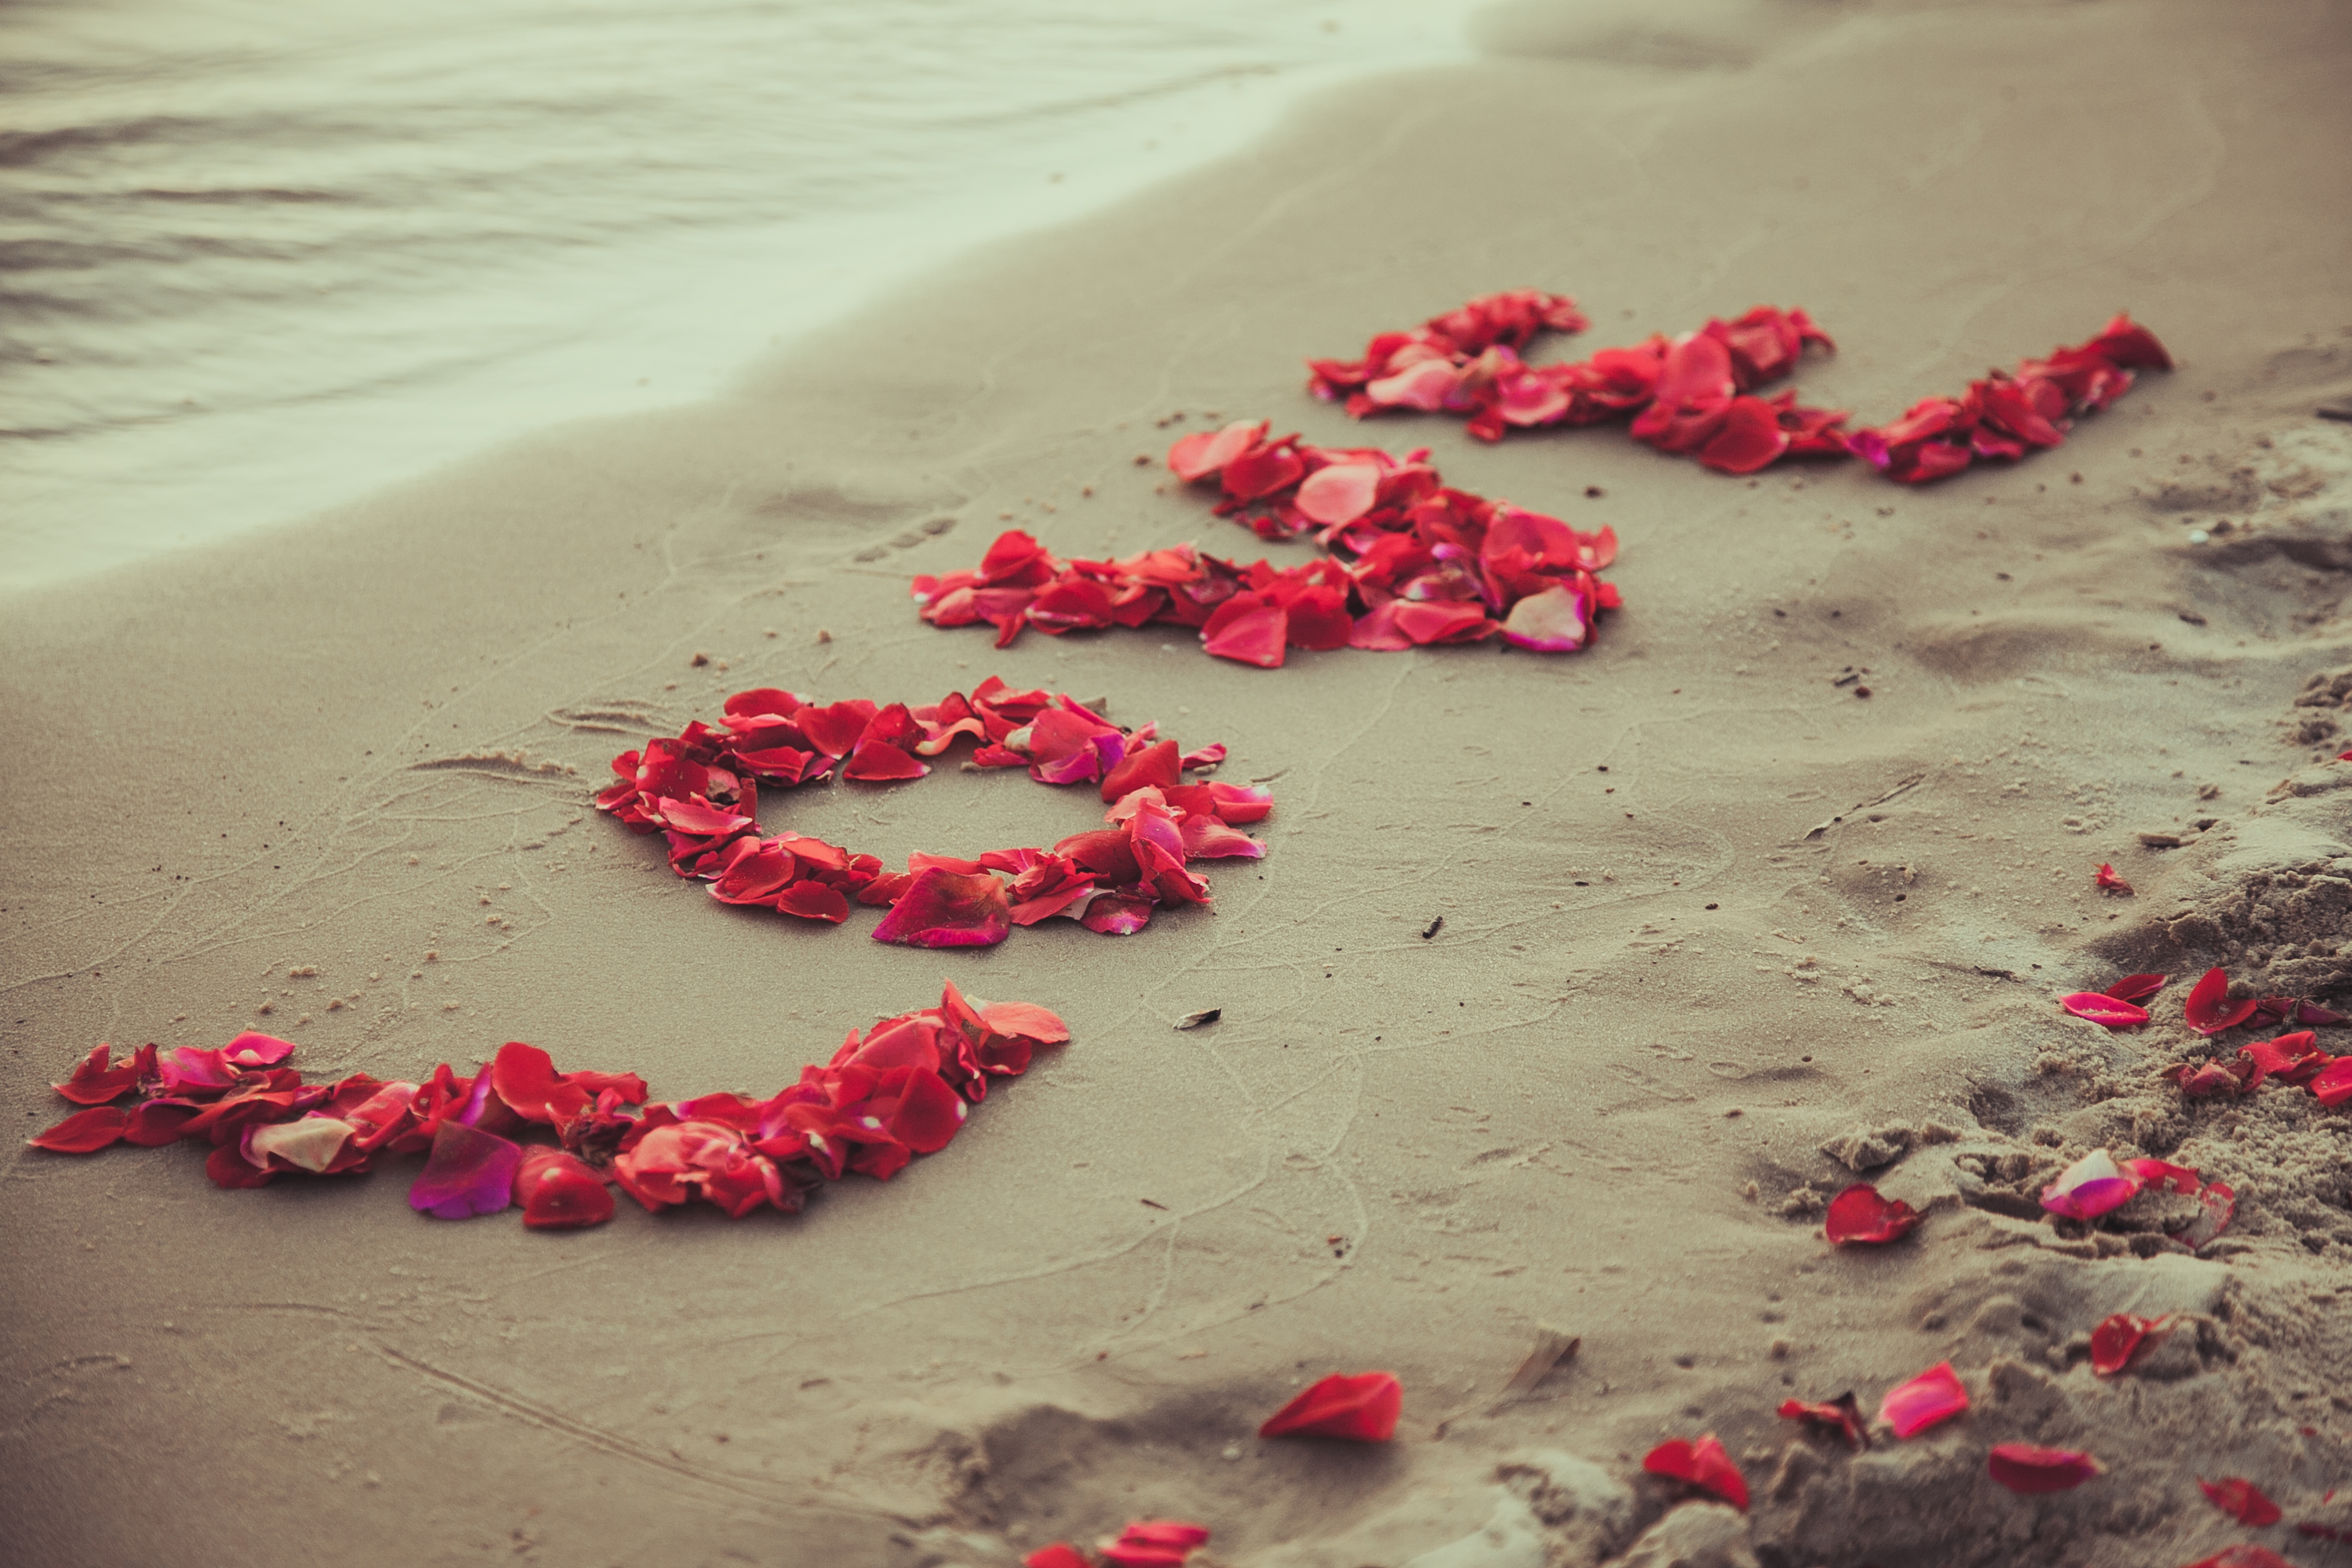 Океан и про любовь. Романтические картинки. Романтичные картинки о любви. Море романтика. Сердечко на берегу моря.